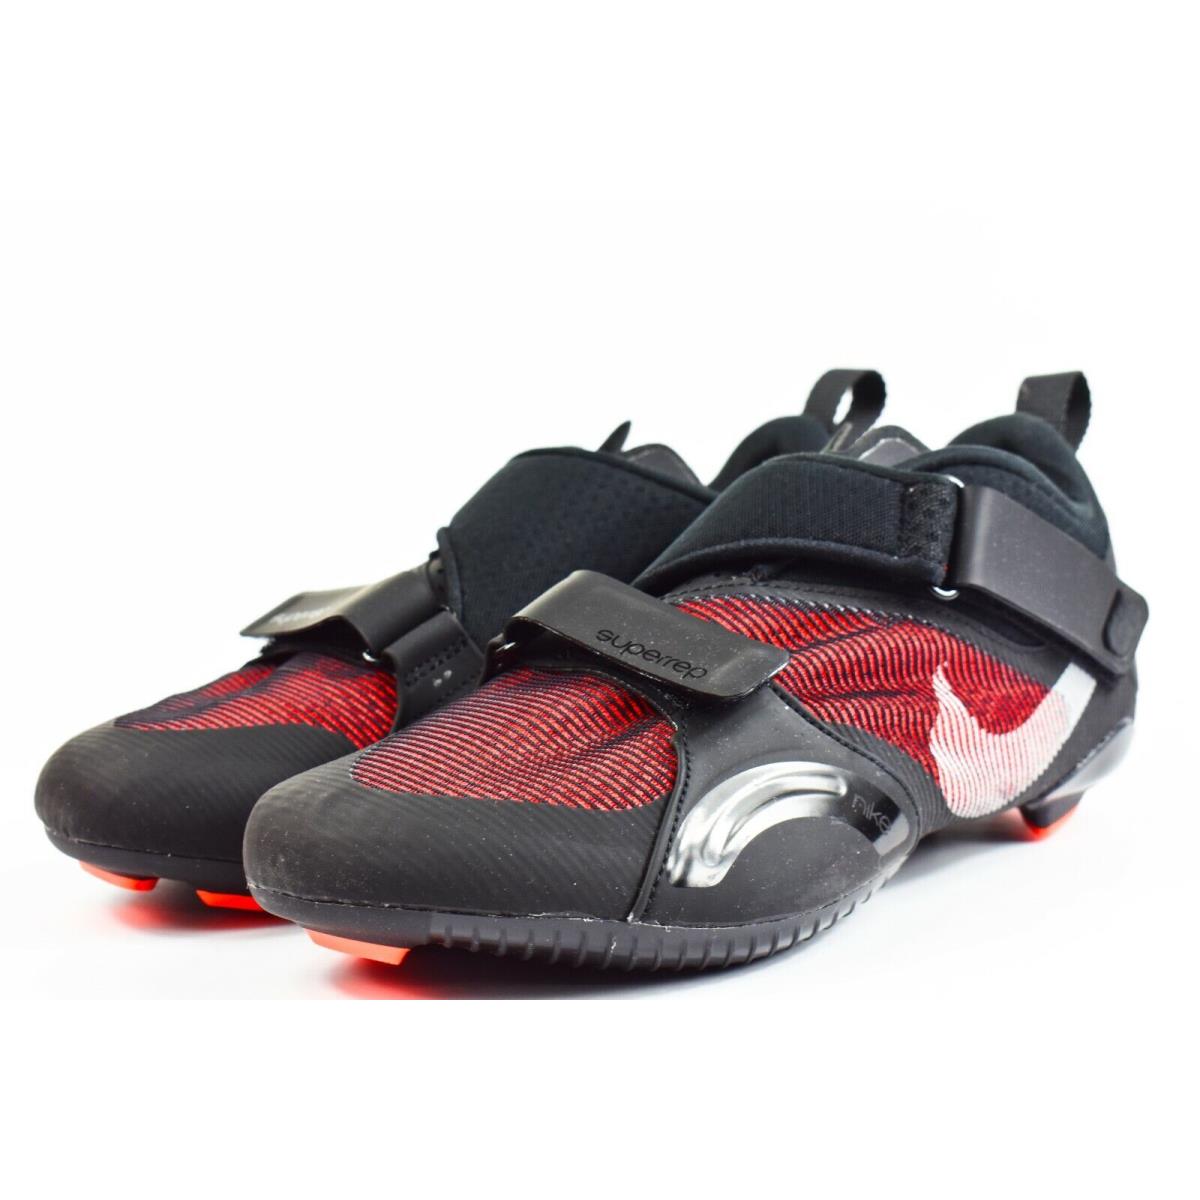 Nike shoes Superrep Cycle - Black 1